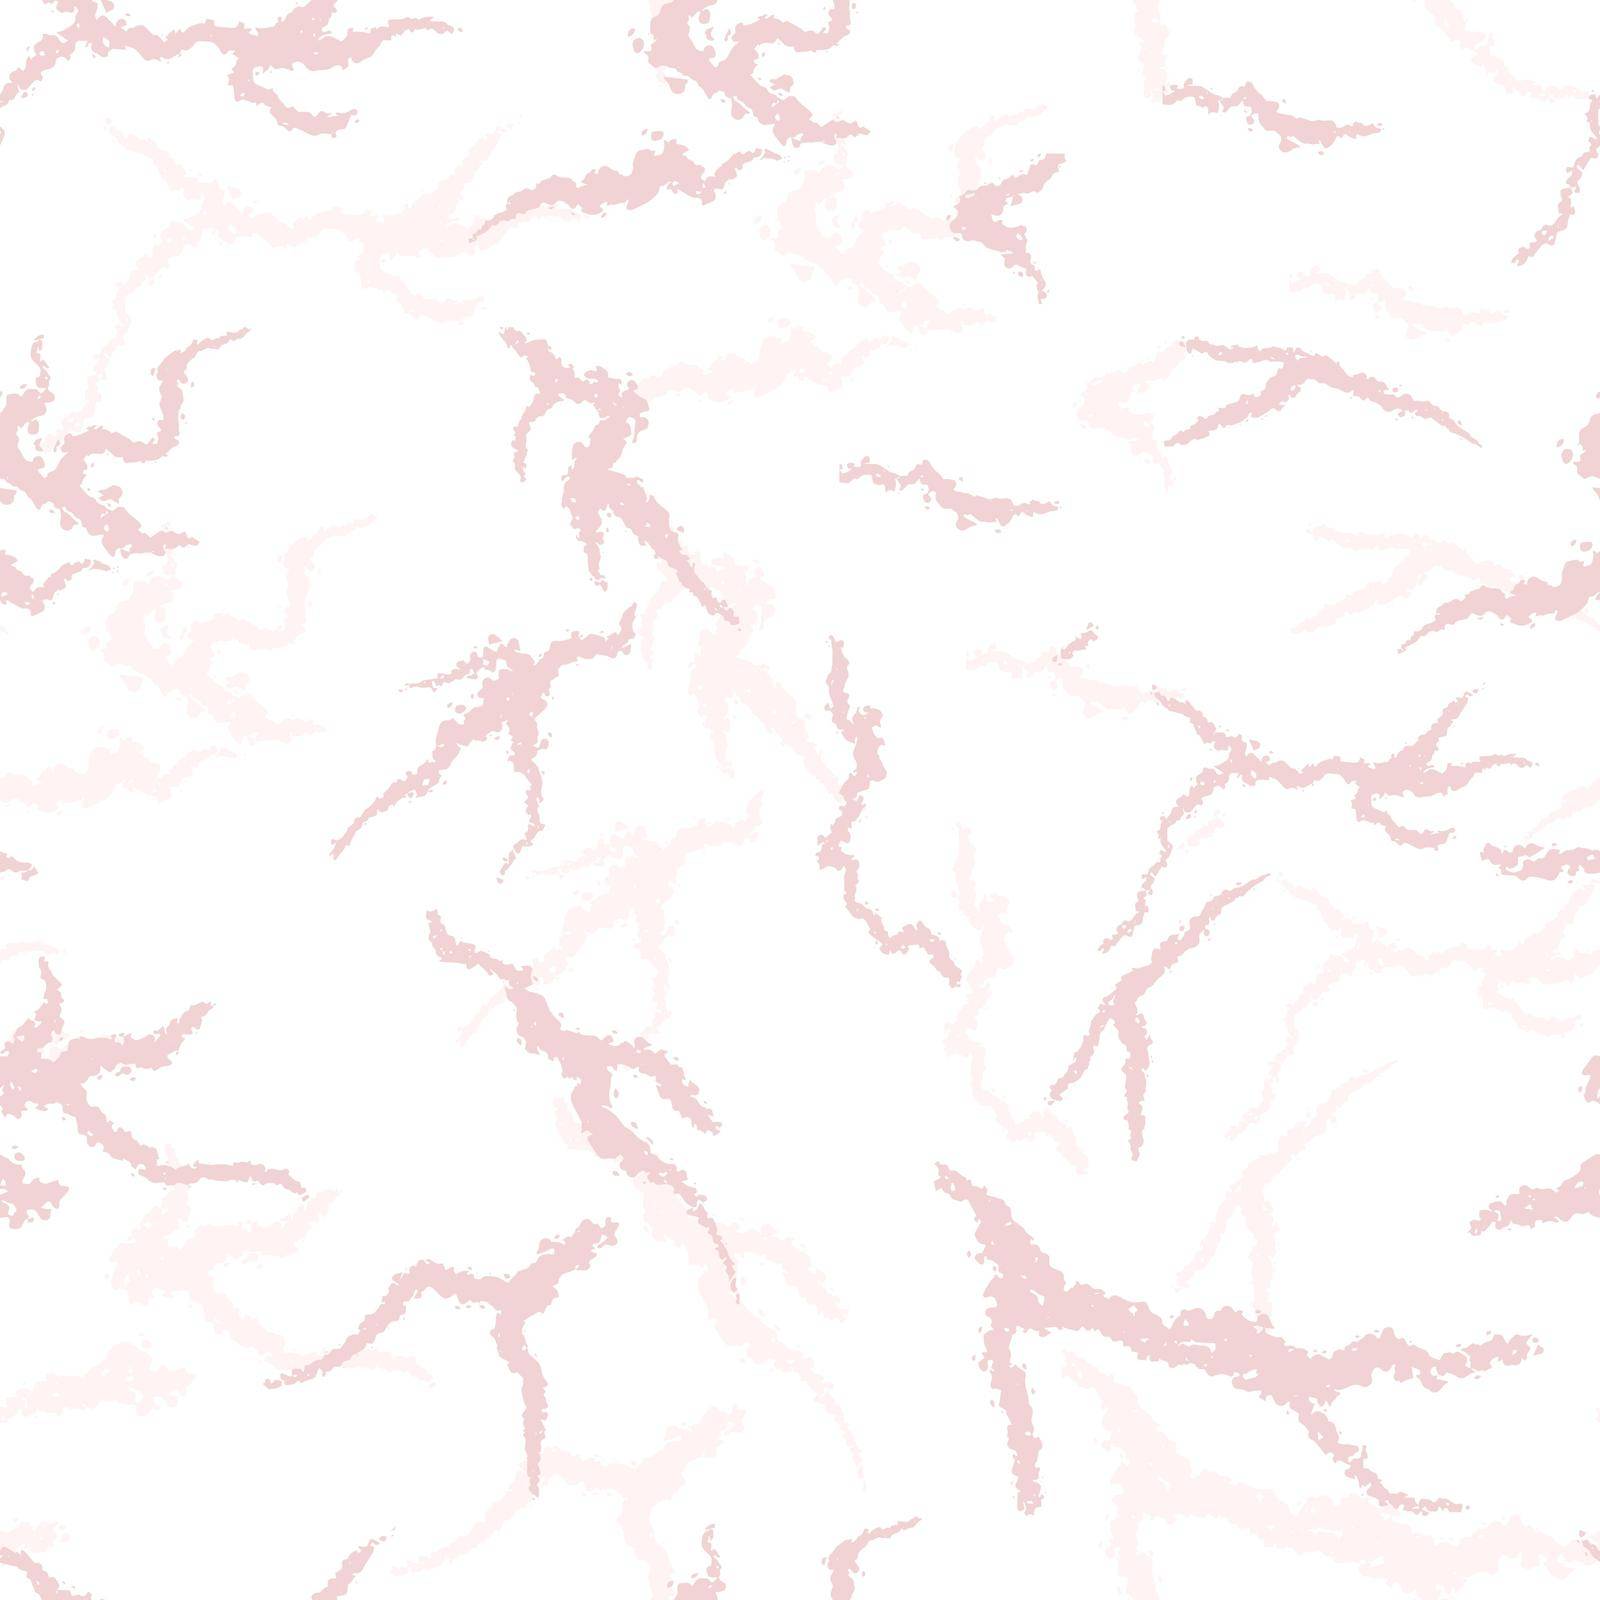 Pink marble texture seamless pattern by TassiaK